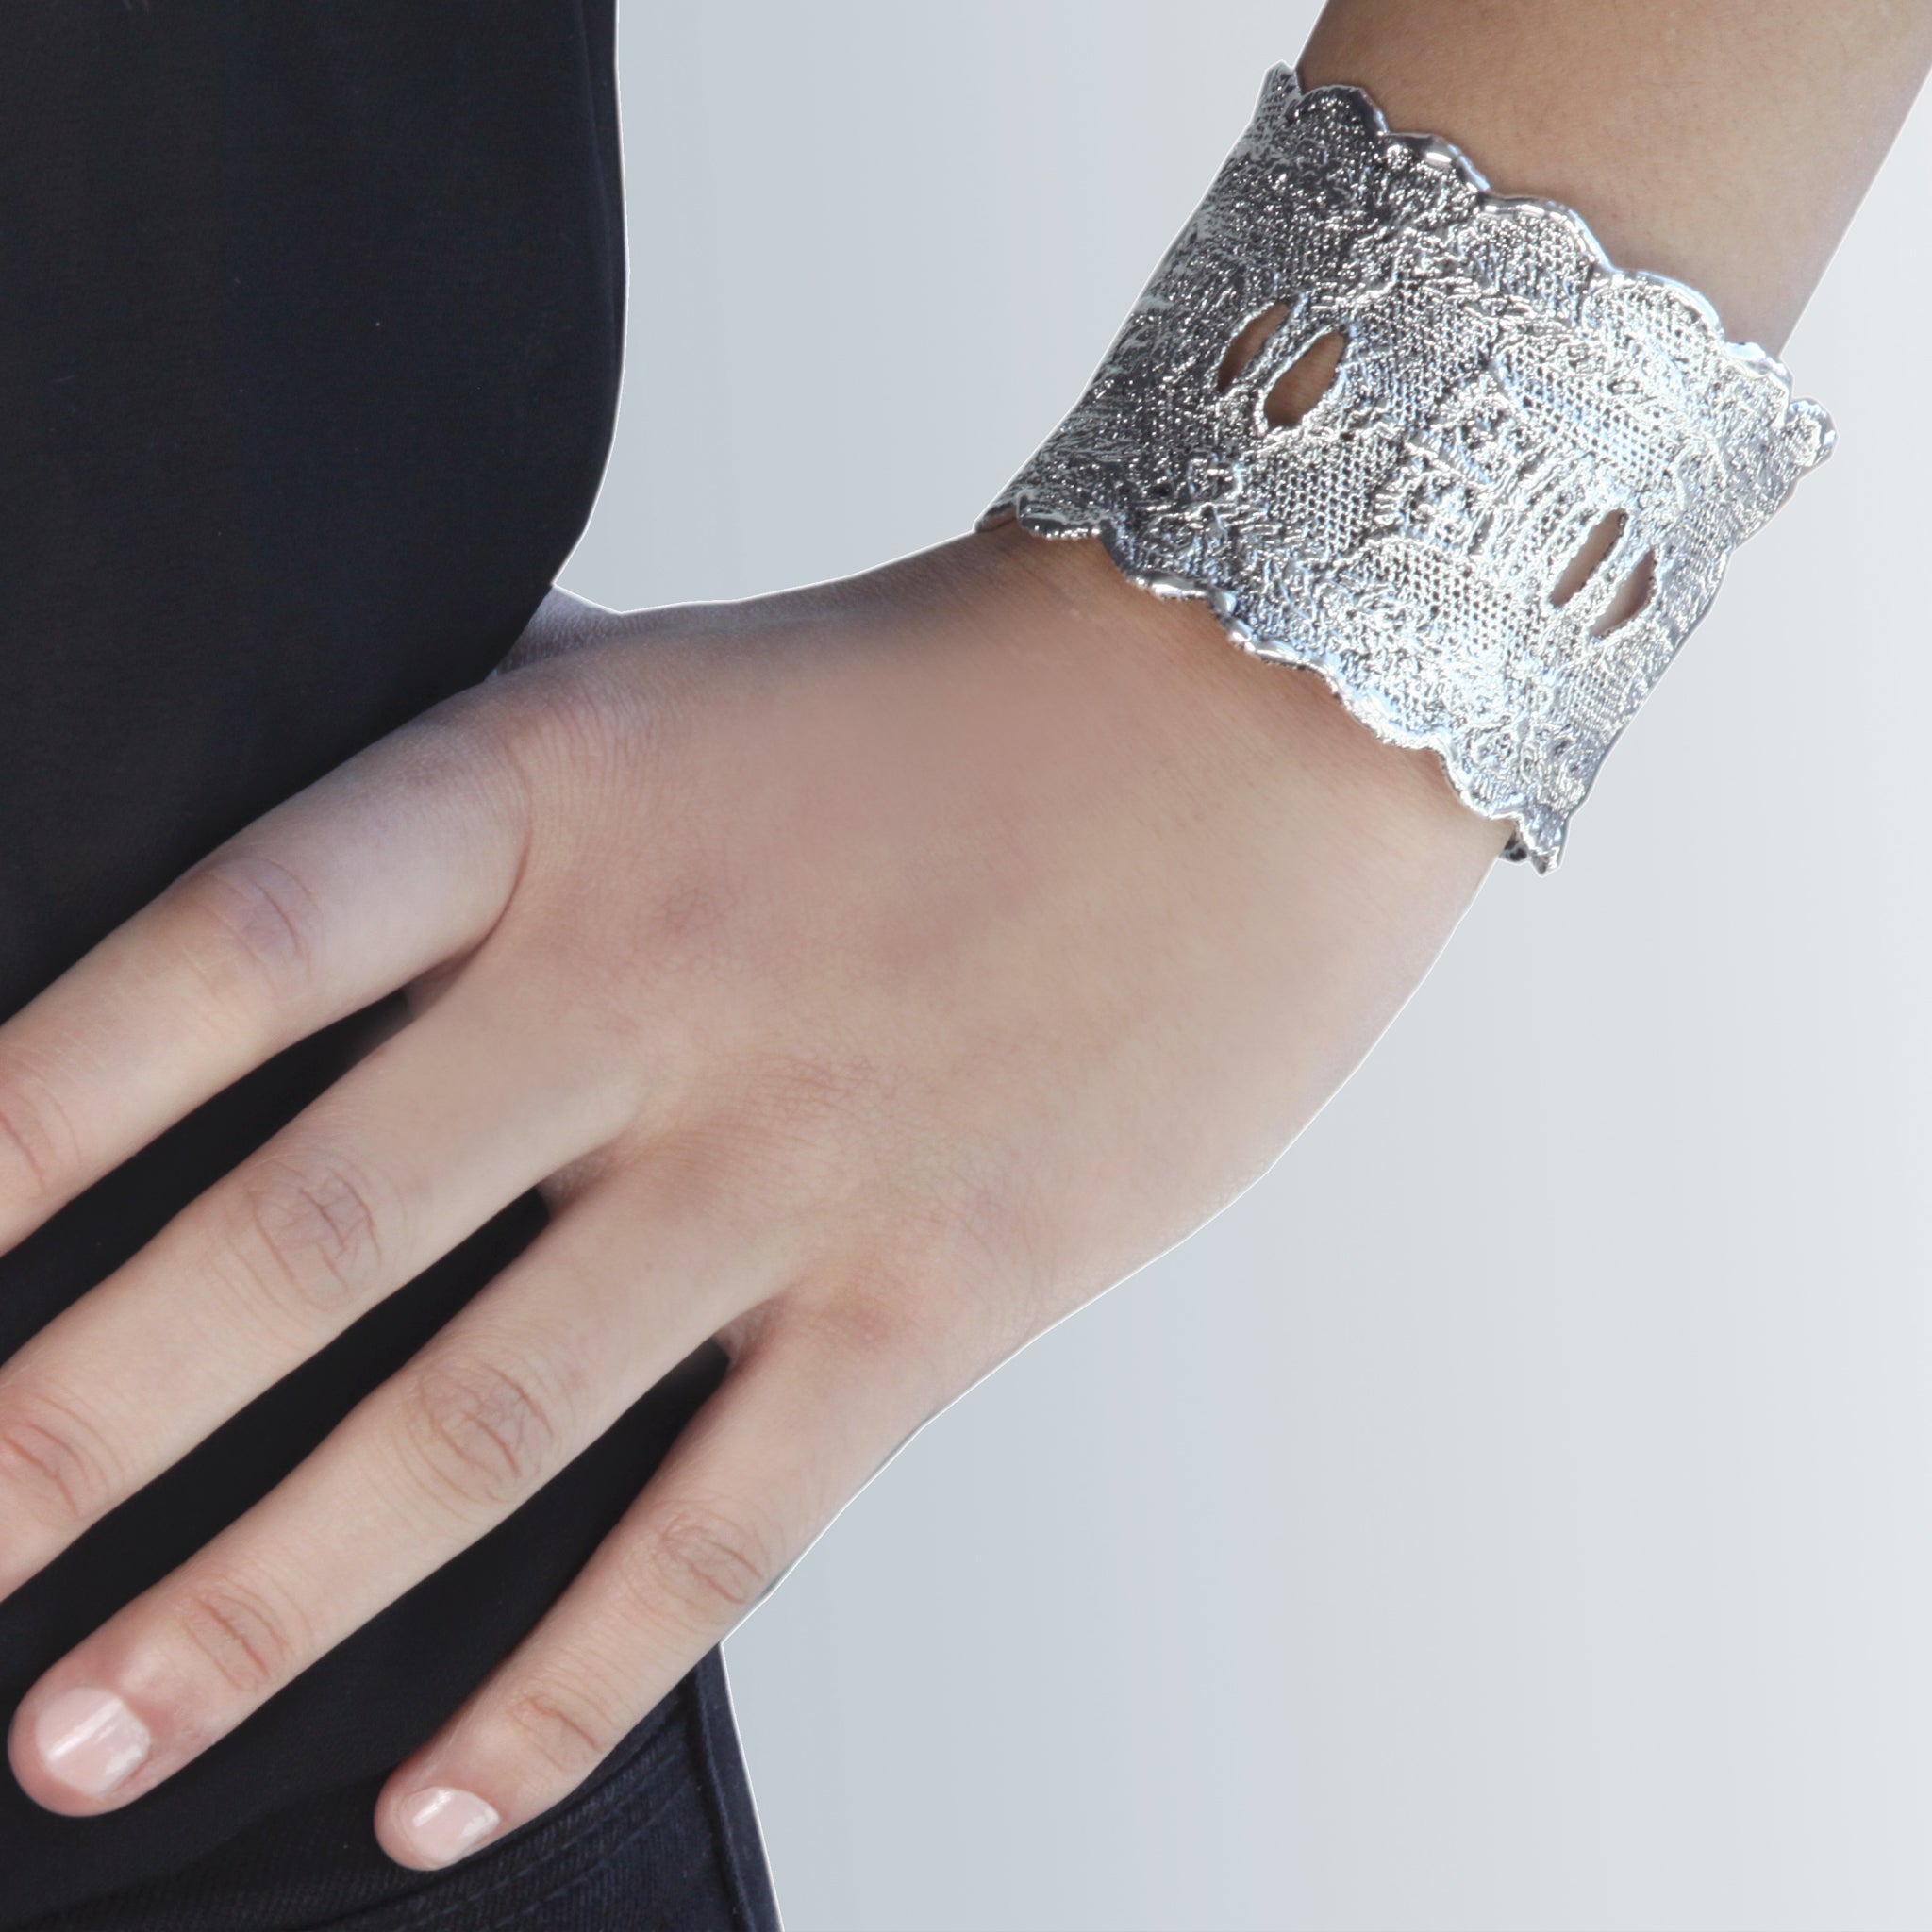 Punk Gothic Lace Fingerless Bracelet, Wrist Accessory For Women | SHEIN EUR